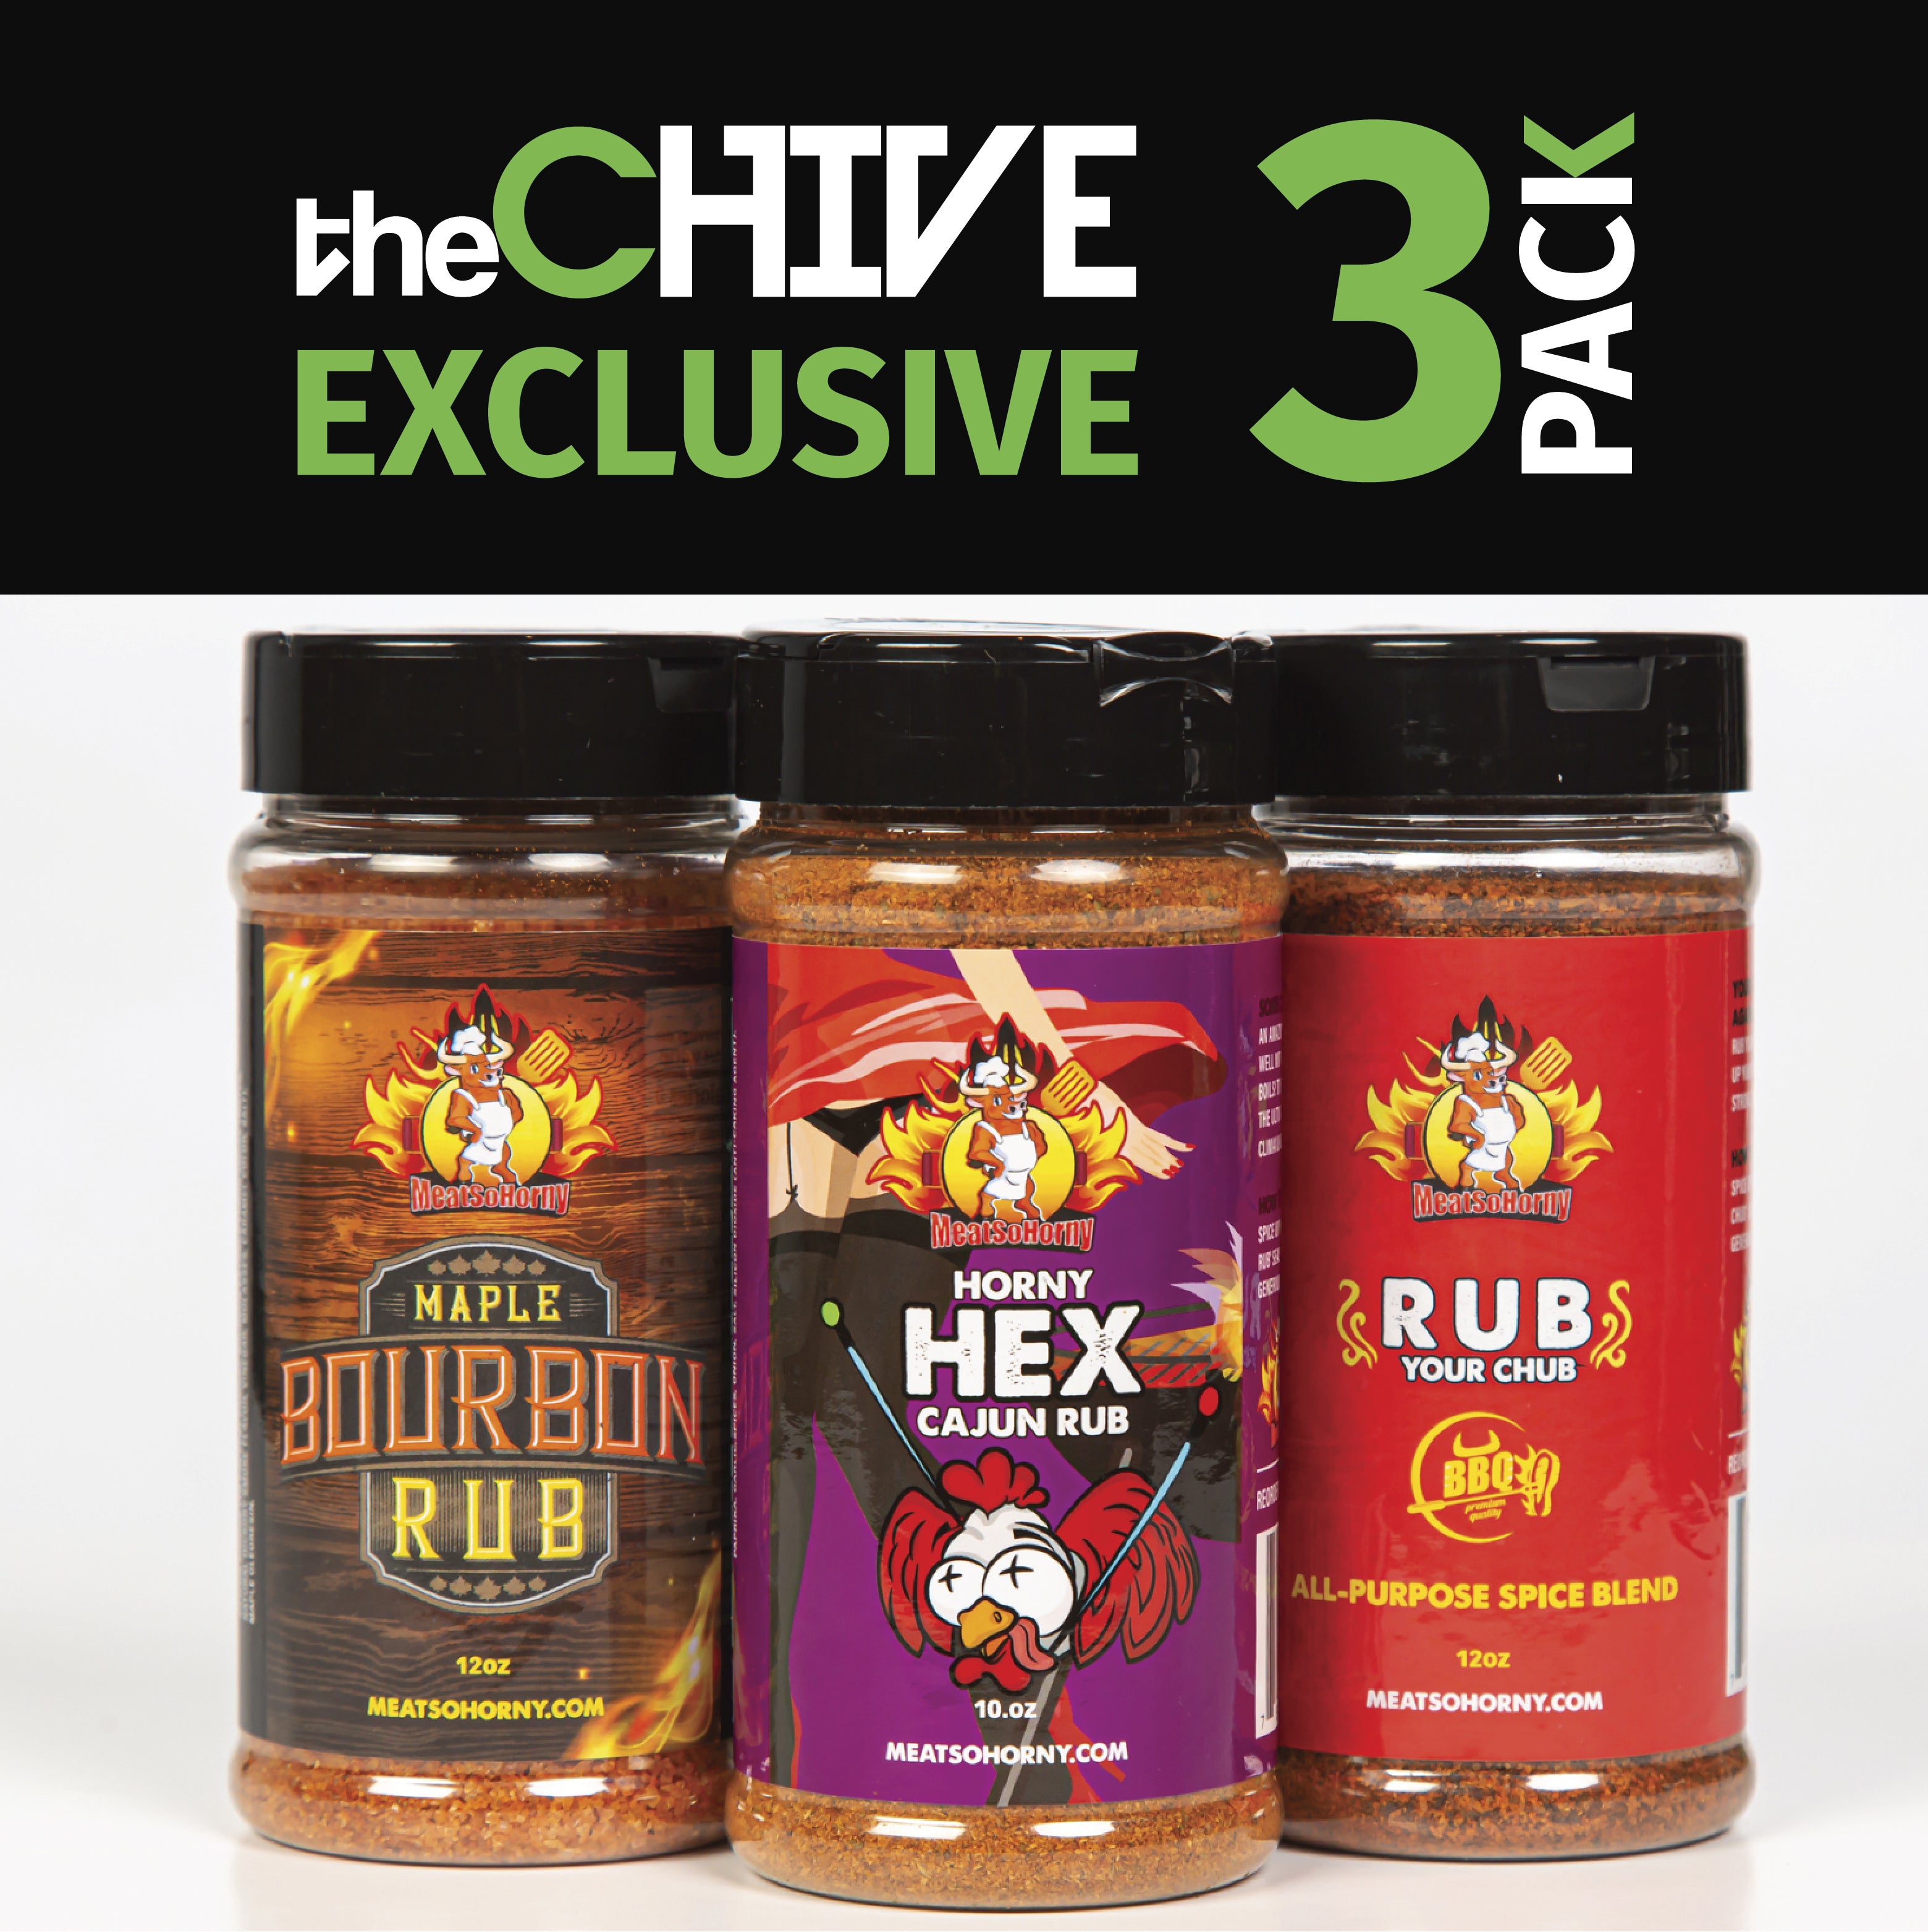 theChive Exclusive Trio Flavor Bundle